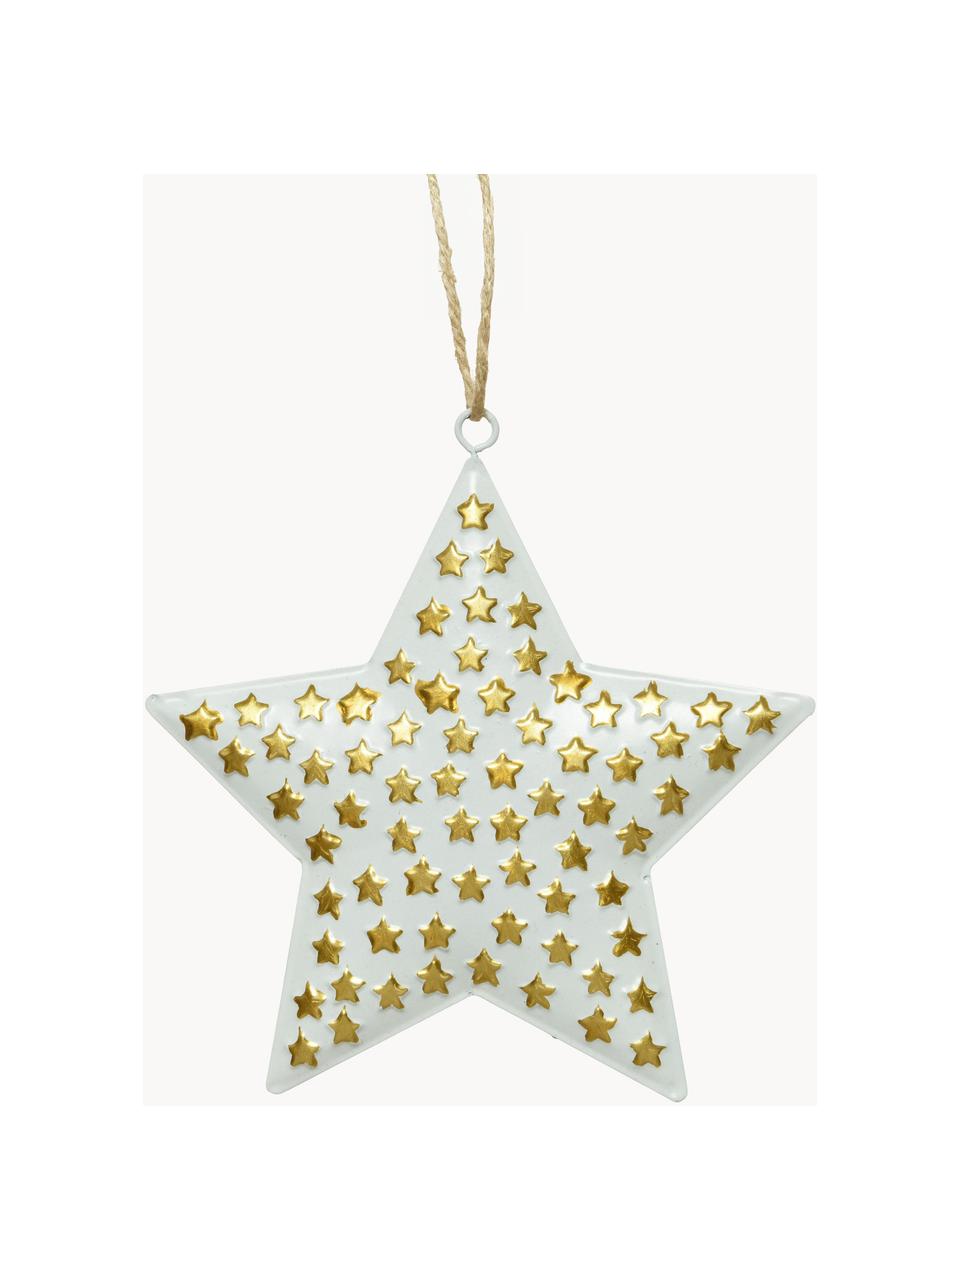 Závěsné hvězdy Milion Stars, 4 ks, Potažený kov, Zlatá, bílá, Š 13 cm, V 13 cm